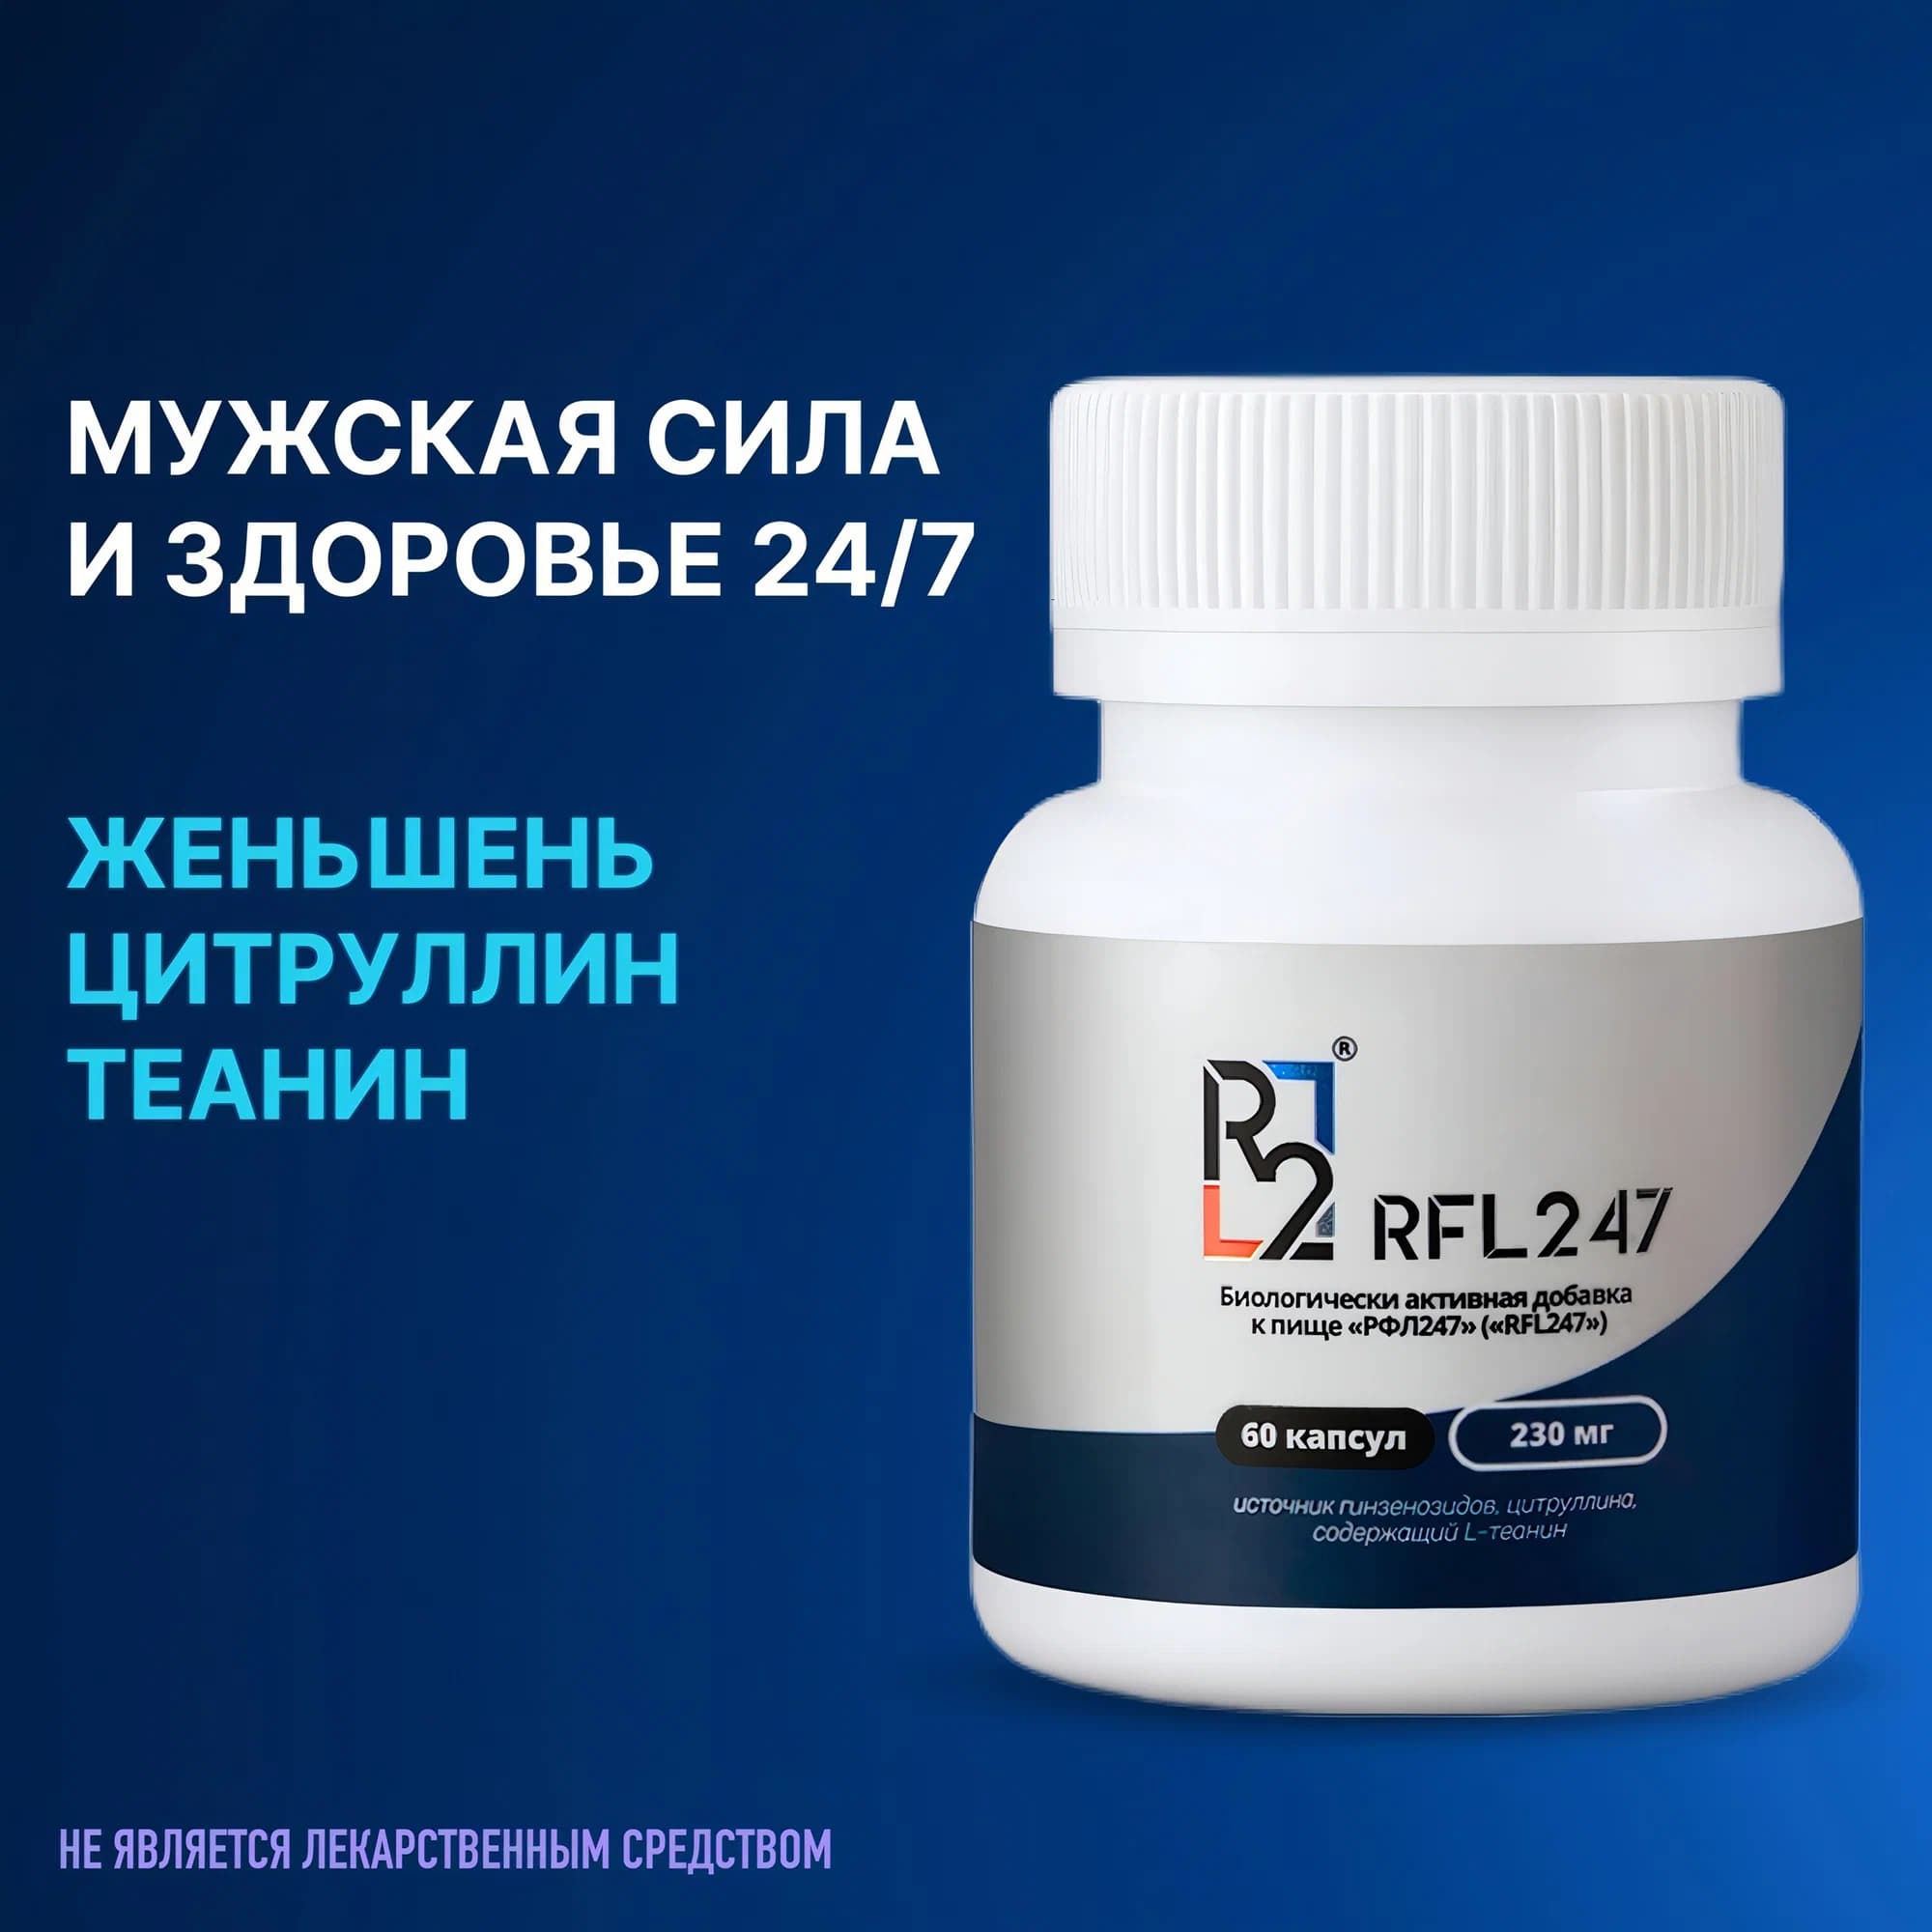 Витамины для мужчин RFL247 с корнем Женьшеня и Цитруллином, 60 капсул 